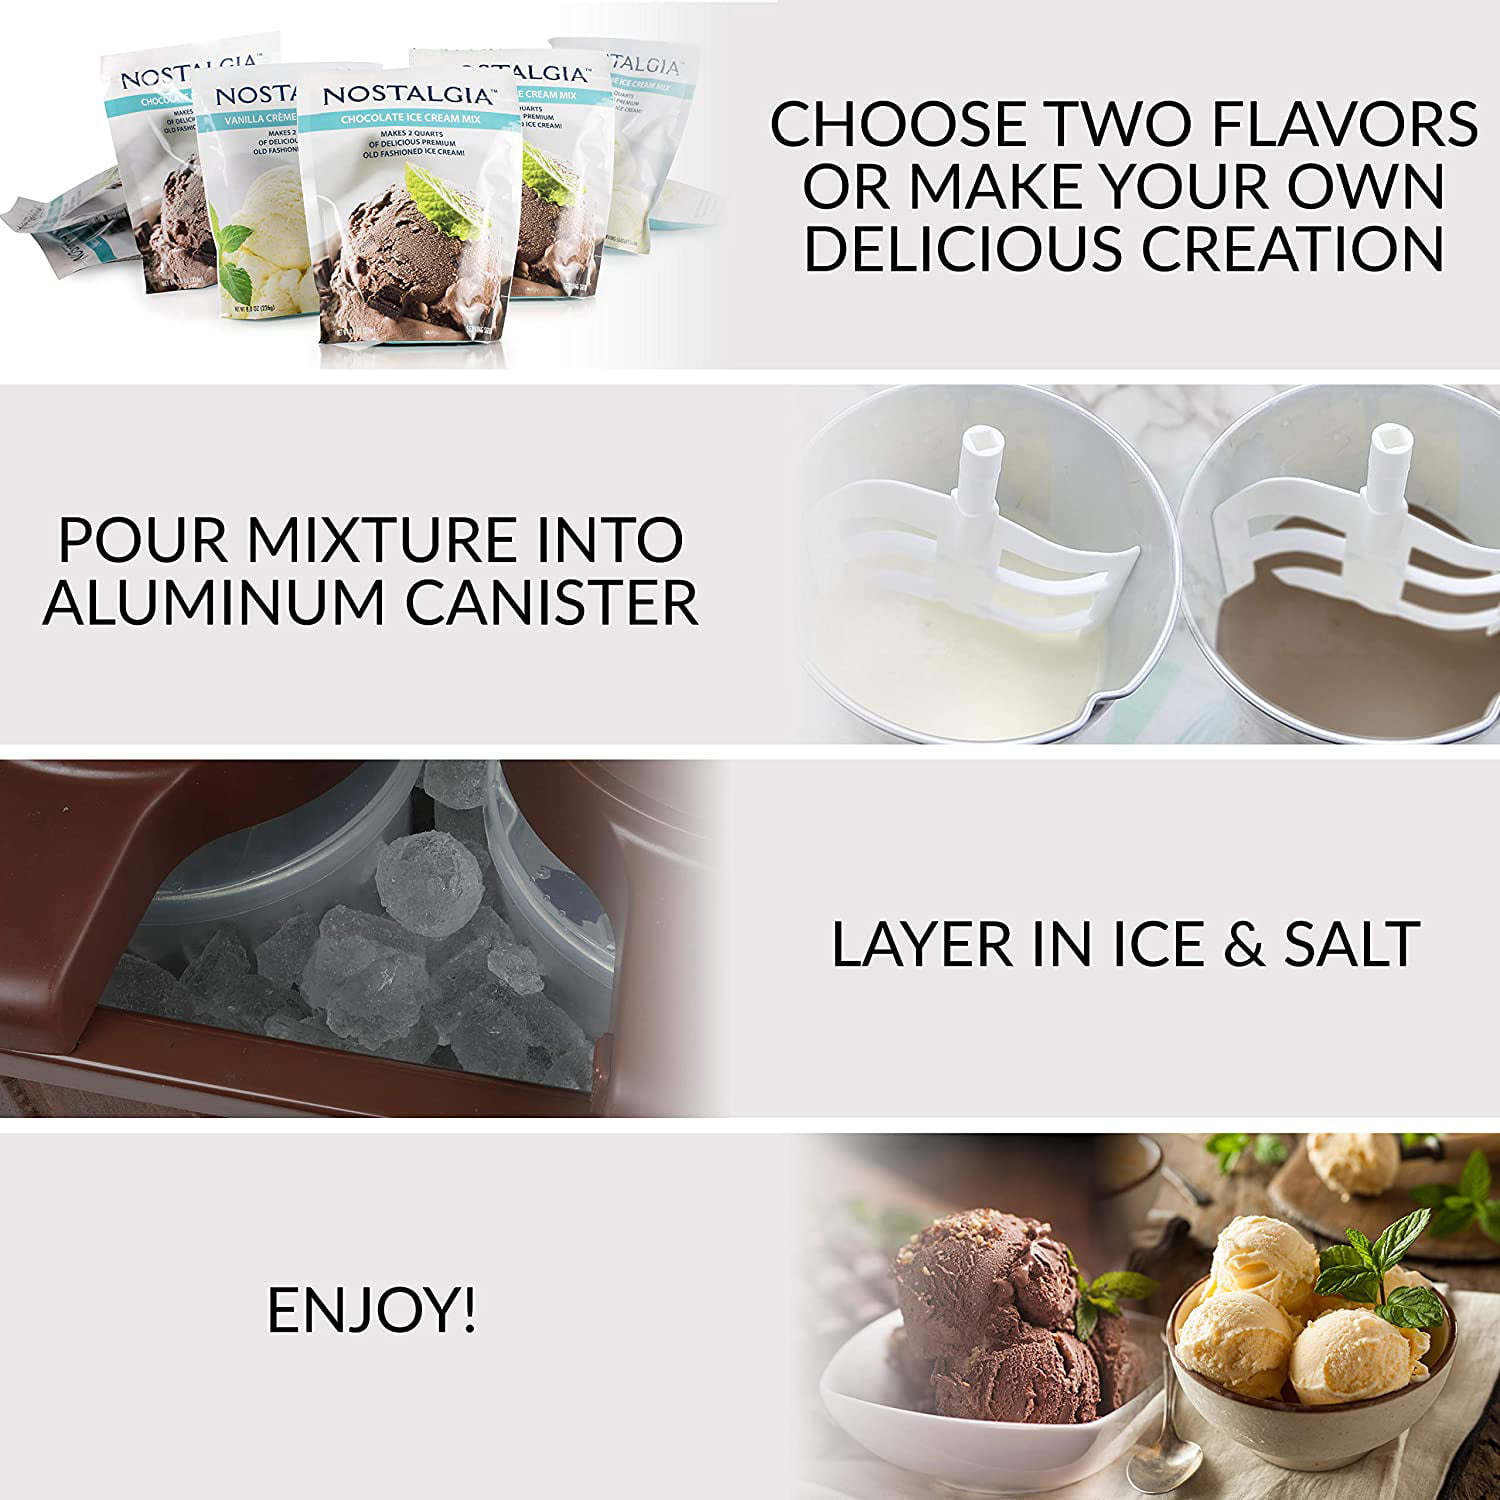 2-Quart Homemade Ice Cream Starter Mix (8-Pack) — Nostalgia Products